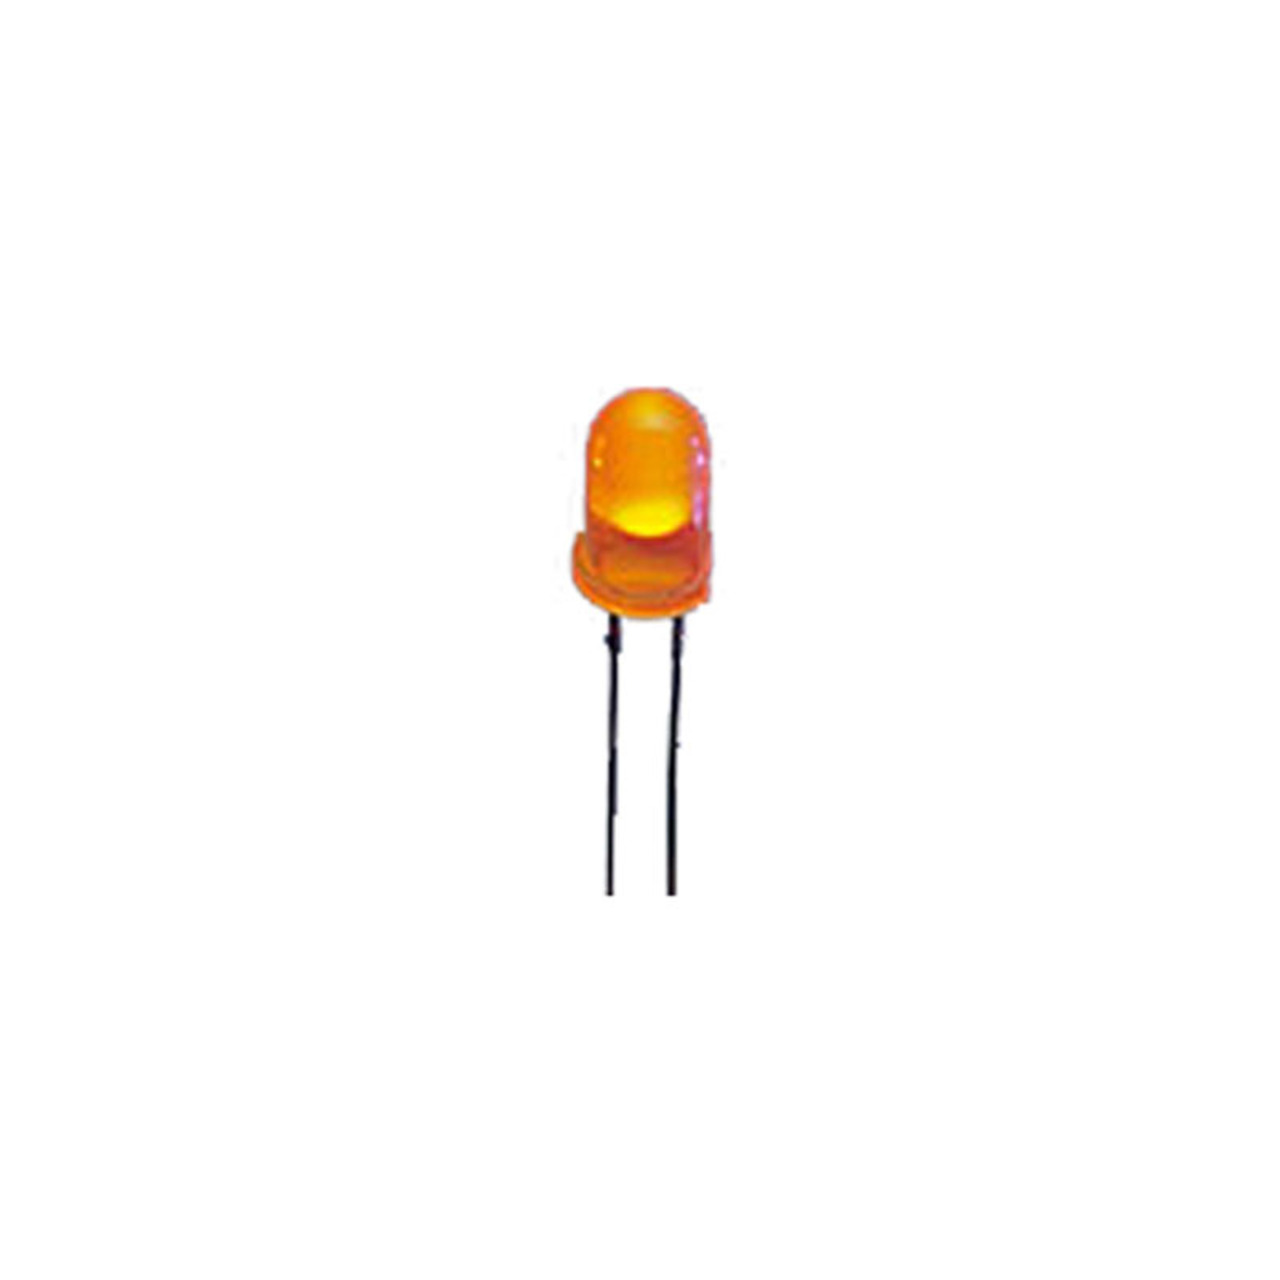 Superhelle 5 mm LED- Orange- 2-500 mcd unter Komponenten